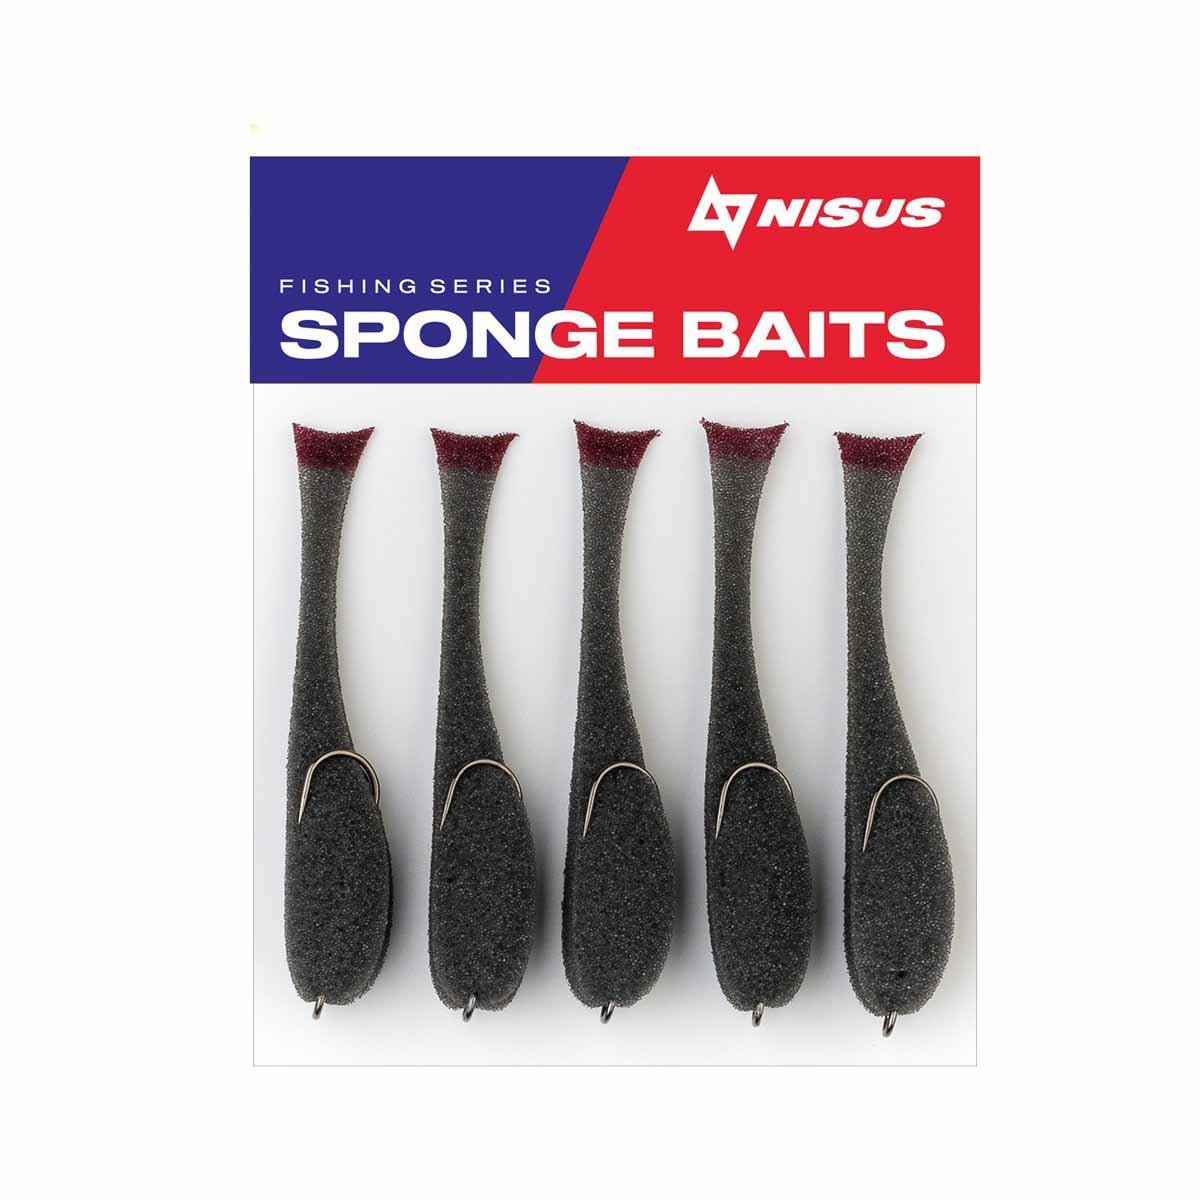 Nisus 4.5 inch Sponge Bait Fishing Lure, pack of 5 – TONAREX